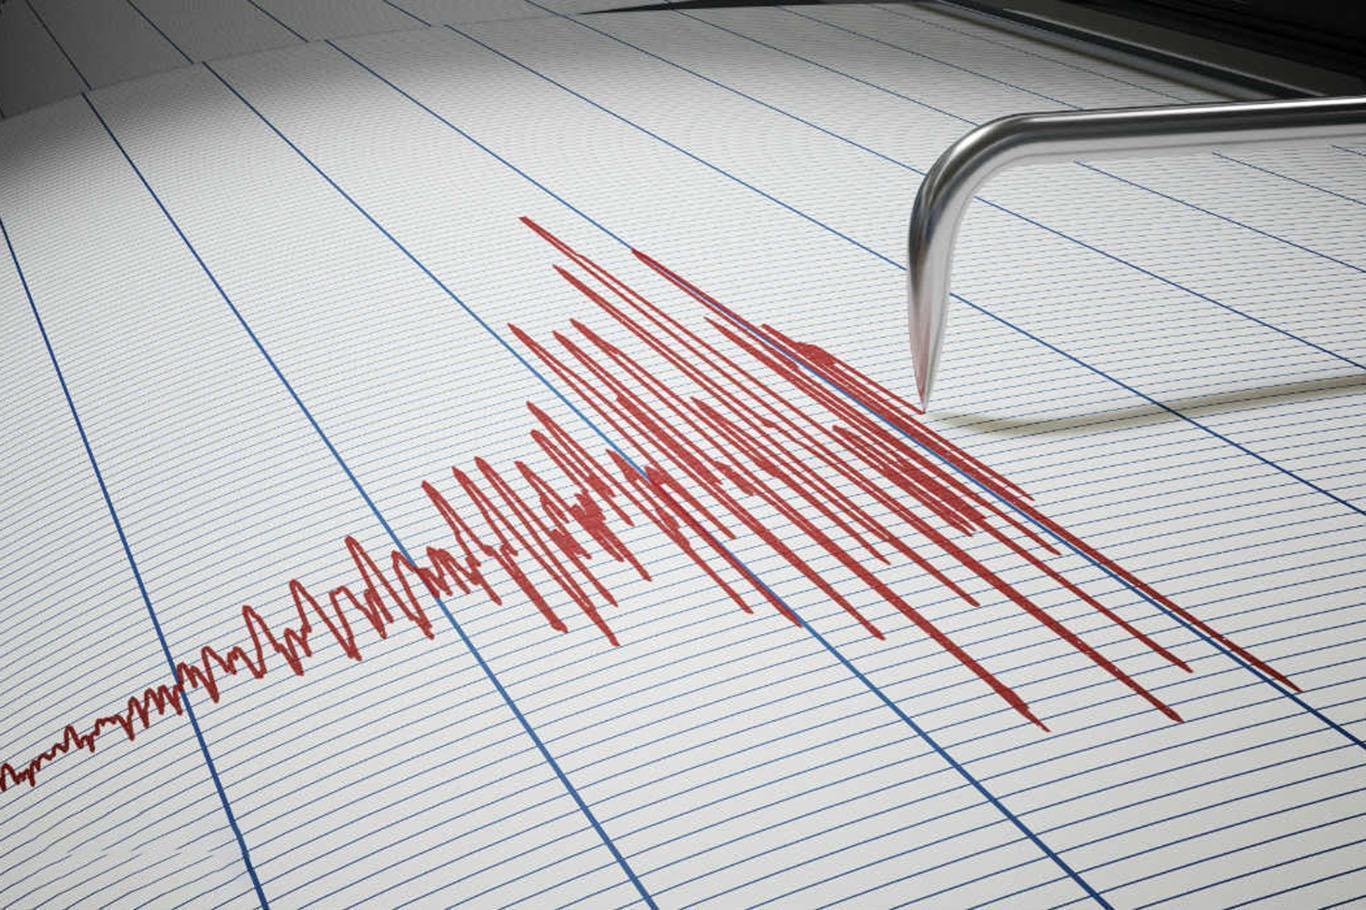 A 5.6-magnitude earthquake hits Yasuj and Sisakht cities in Iran 